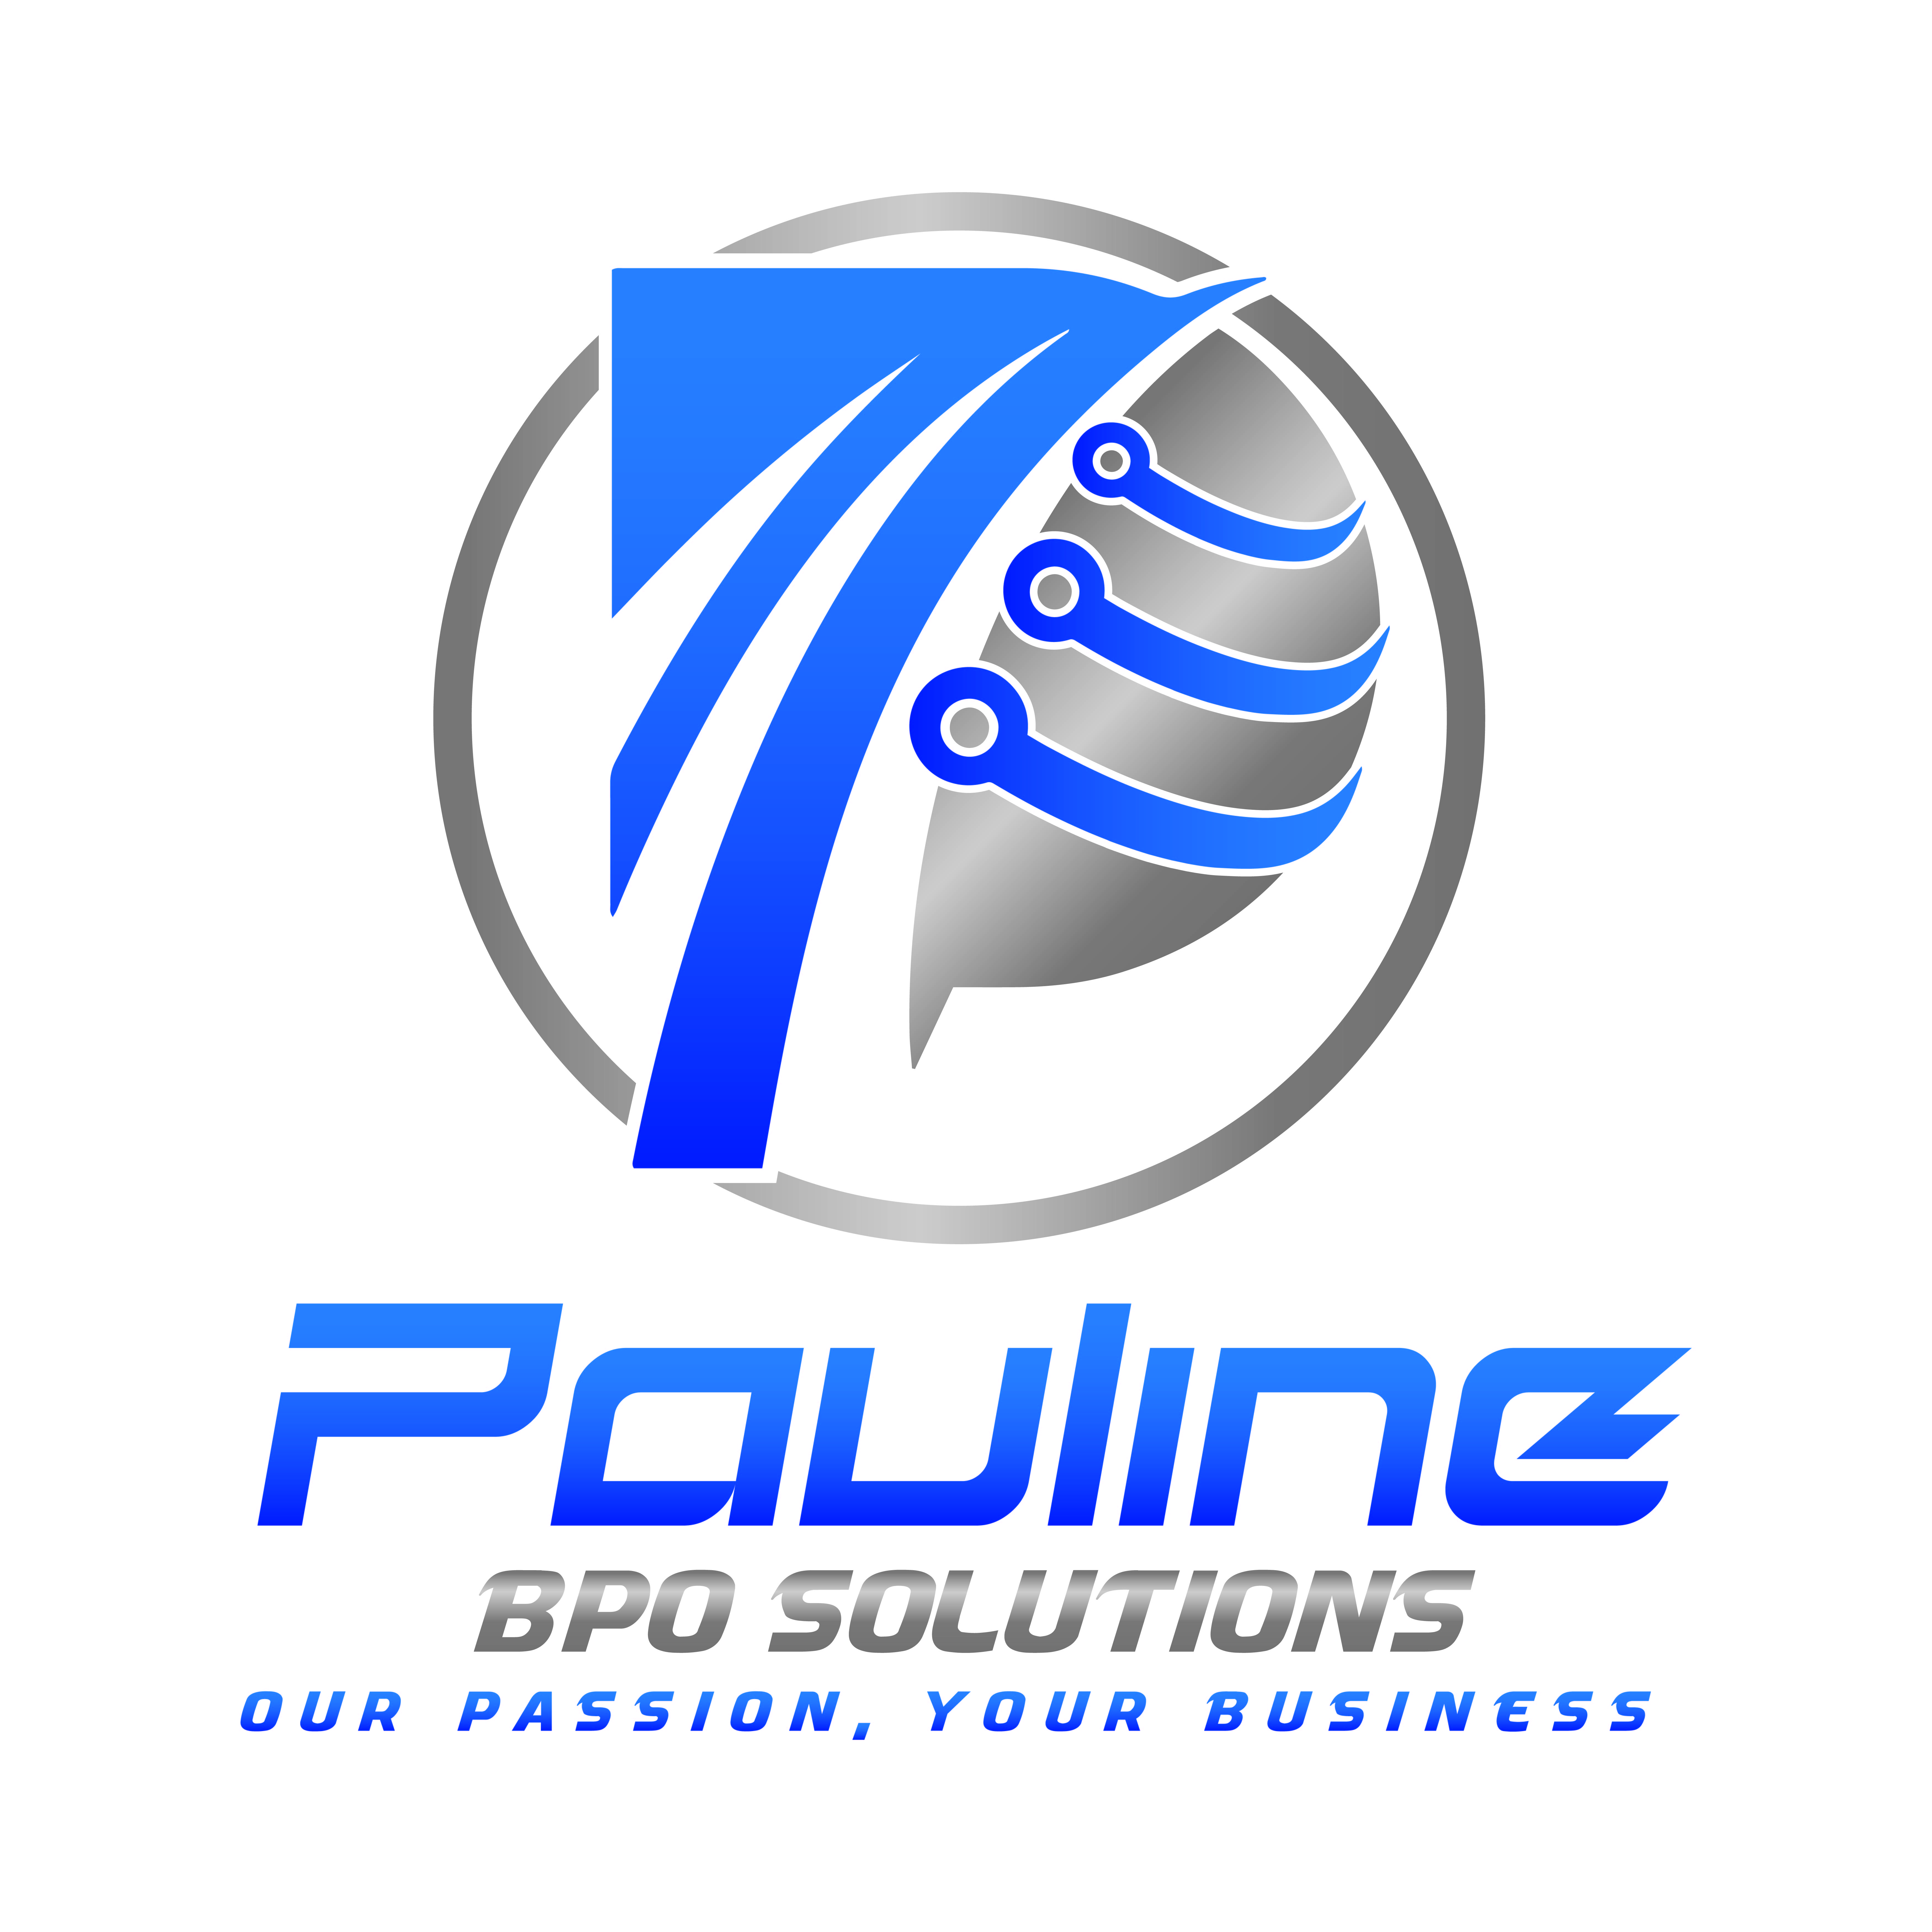 Pauline BPO Solutions